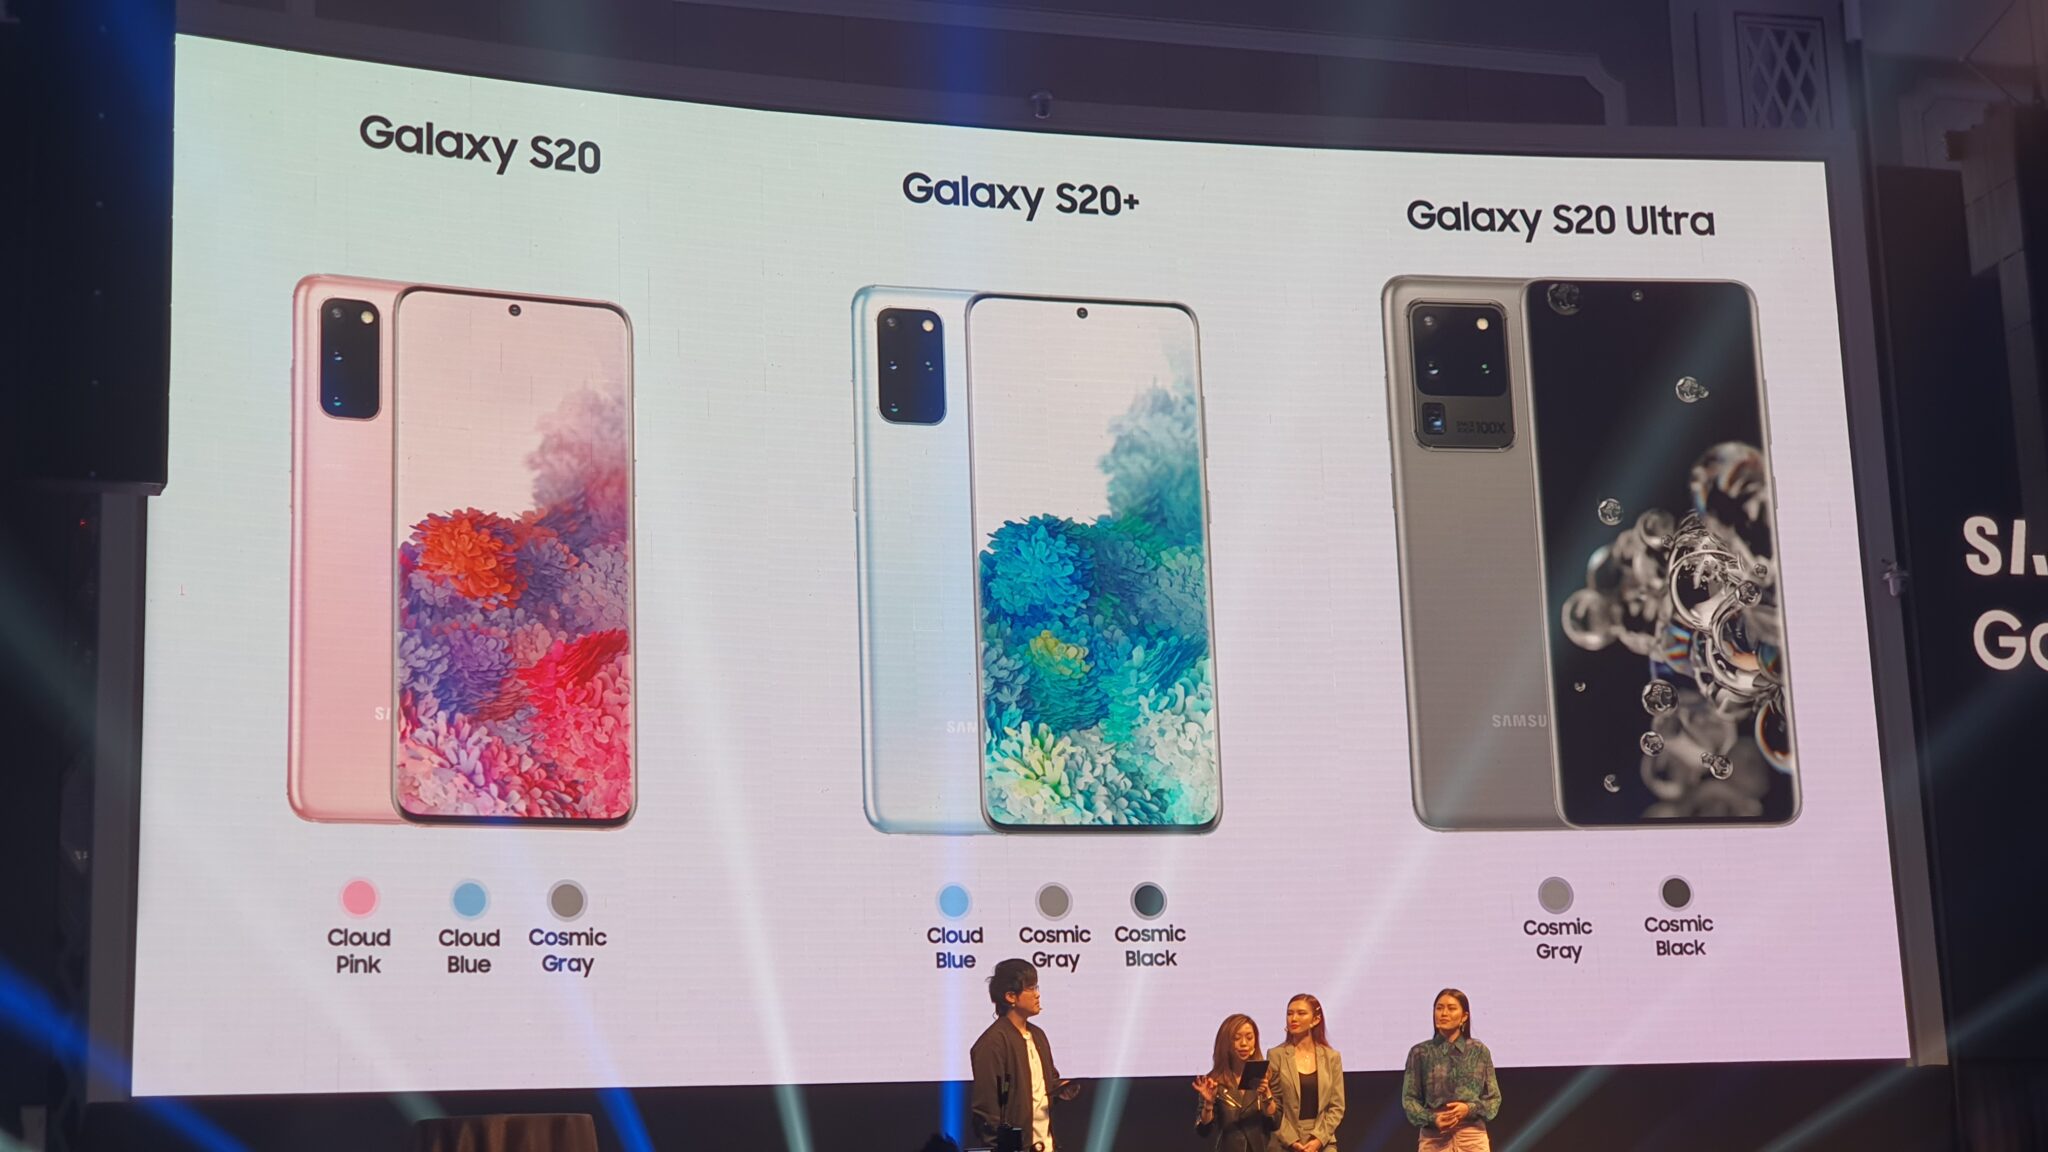 Galaxy S20 colour variants